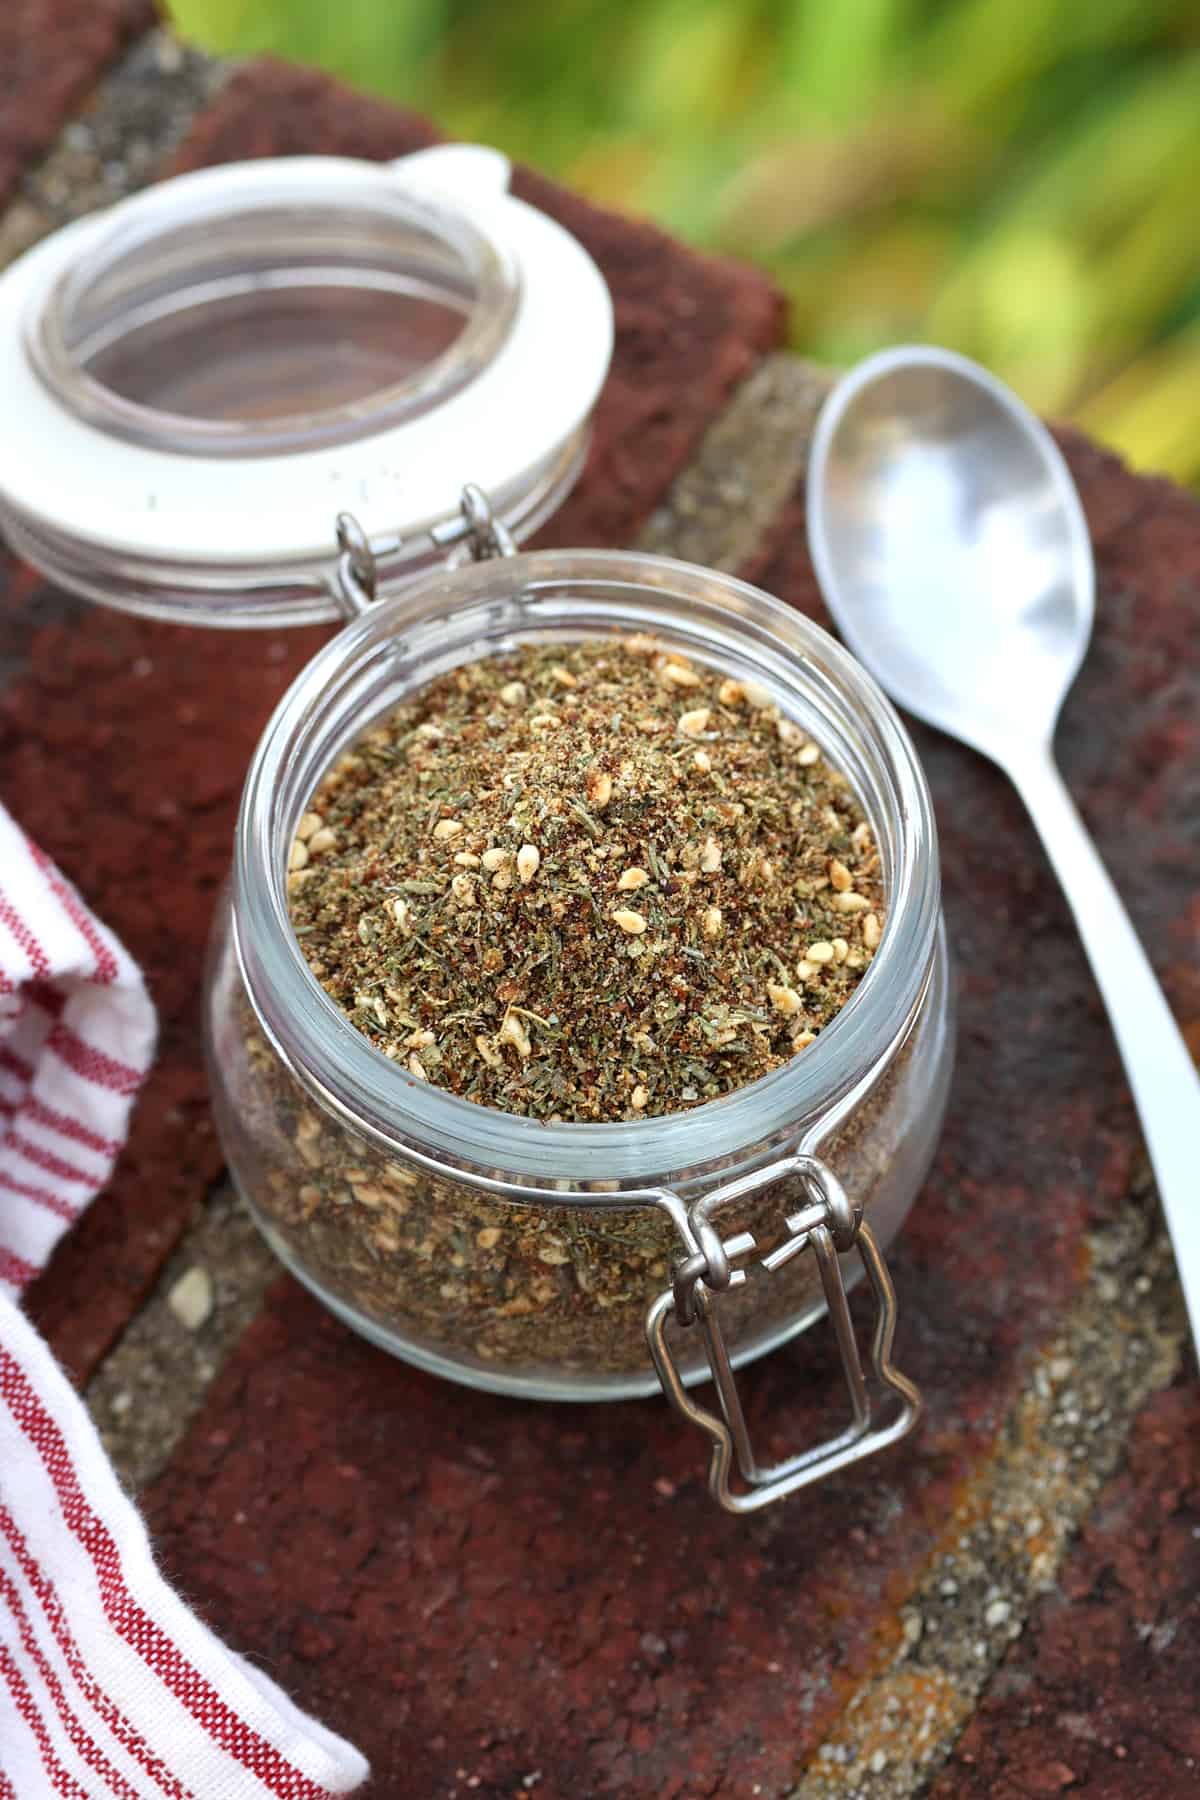 za'atar recipe homemade seasoning blend spice mix Middle Eastern sesame seeds sumac